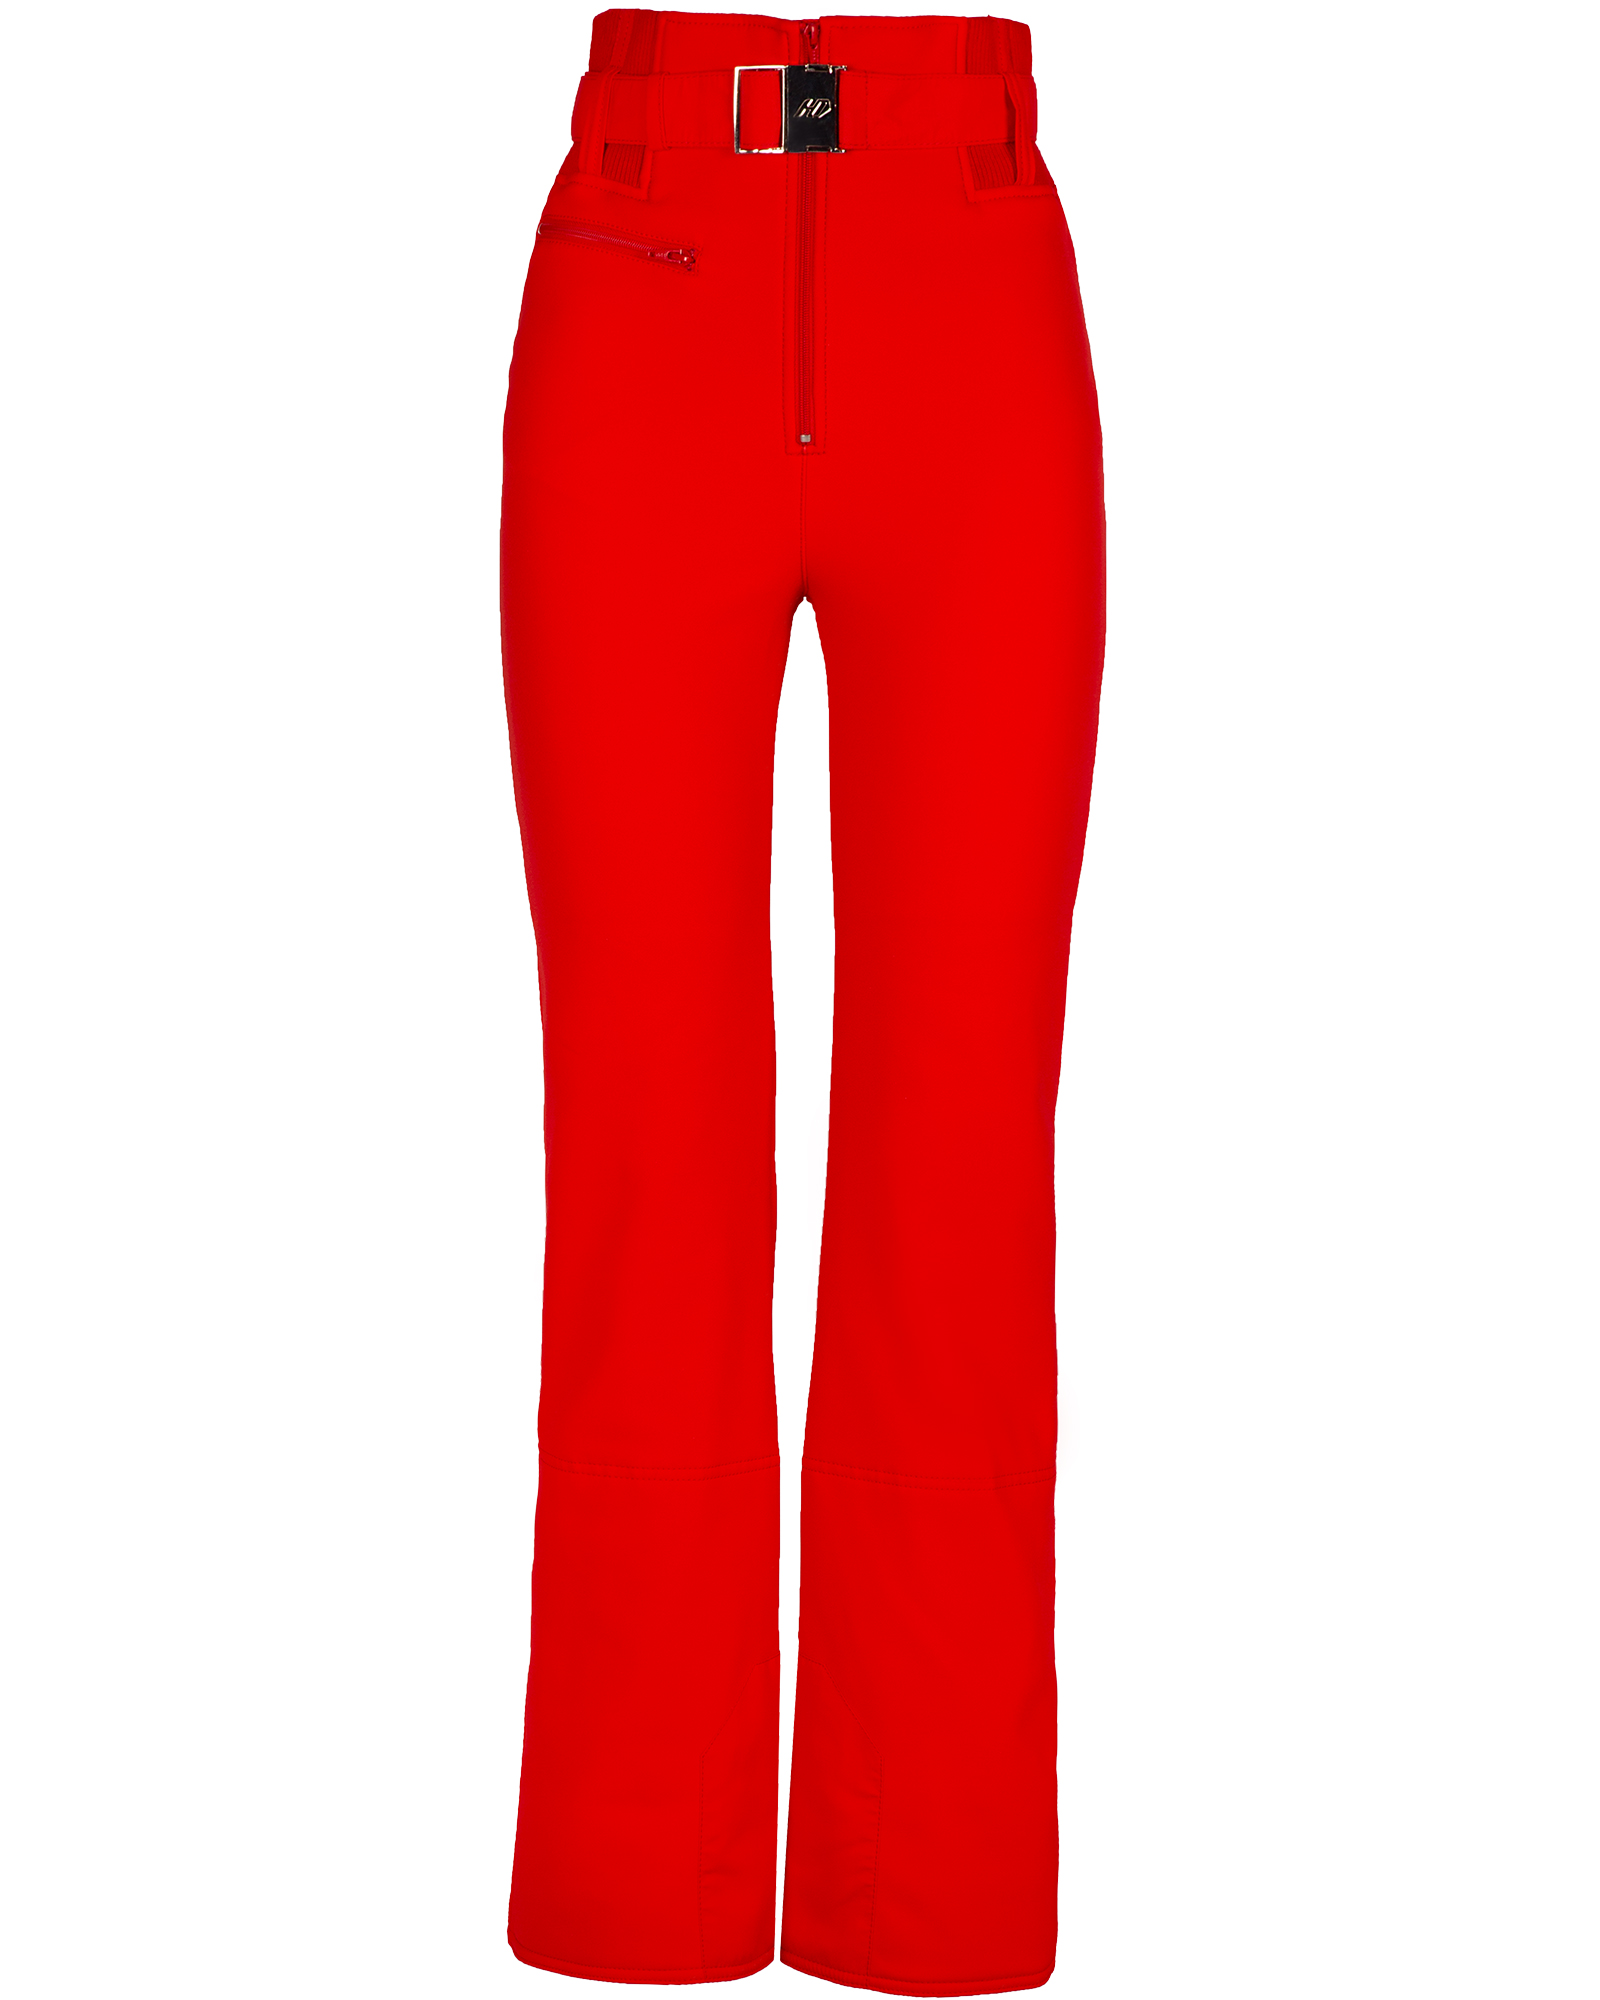 Duvillard Gridin Women’s Pants - Red 10